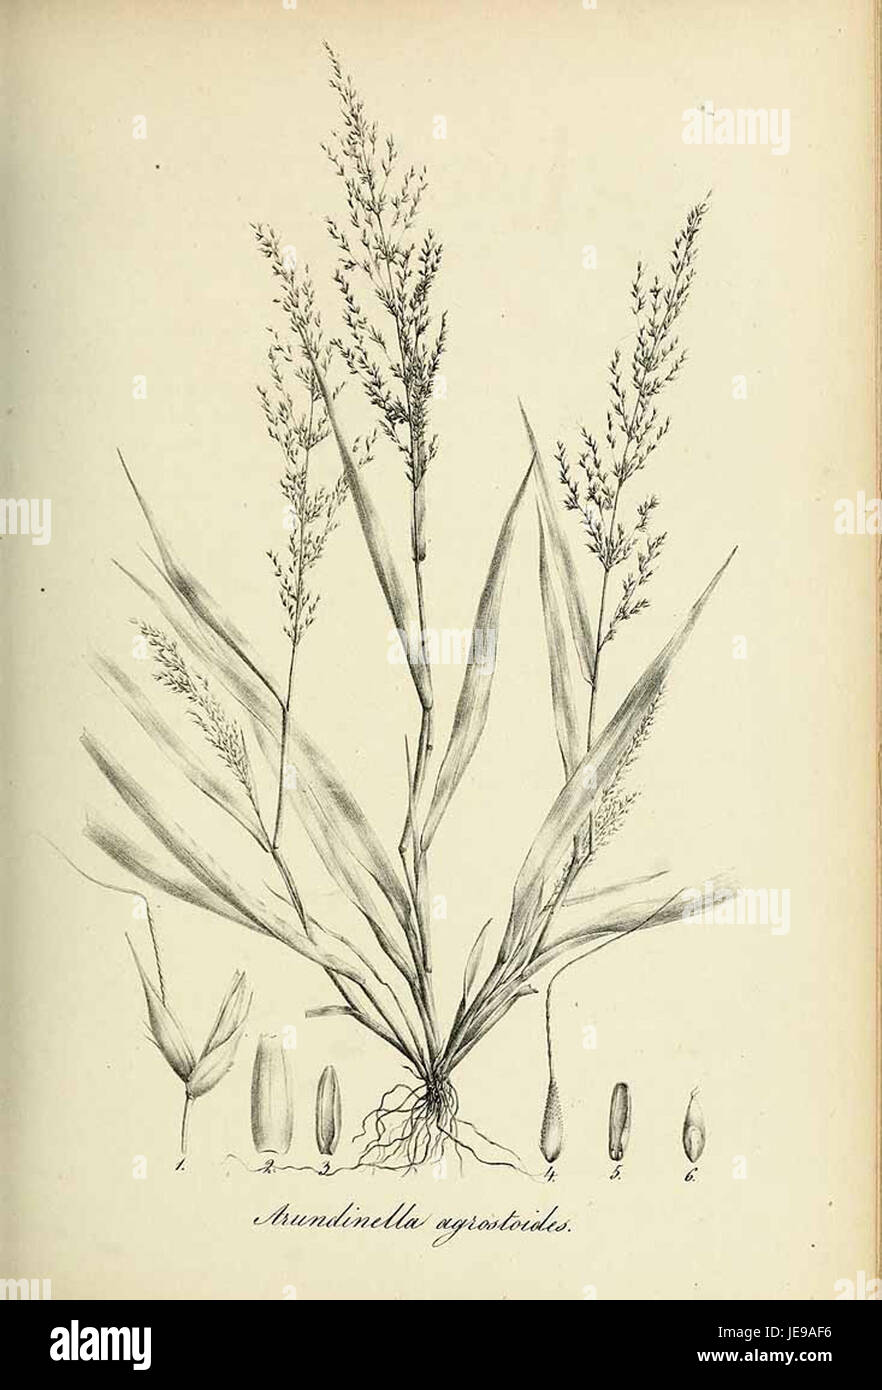 Arundinella agrostoides - Species graminum - Volume 3 Stock Photo